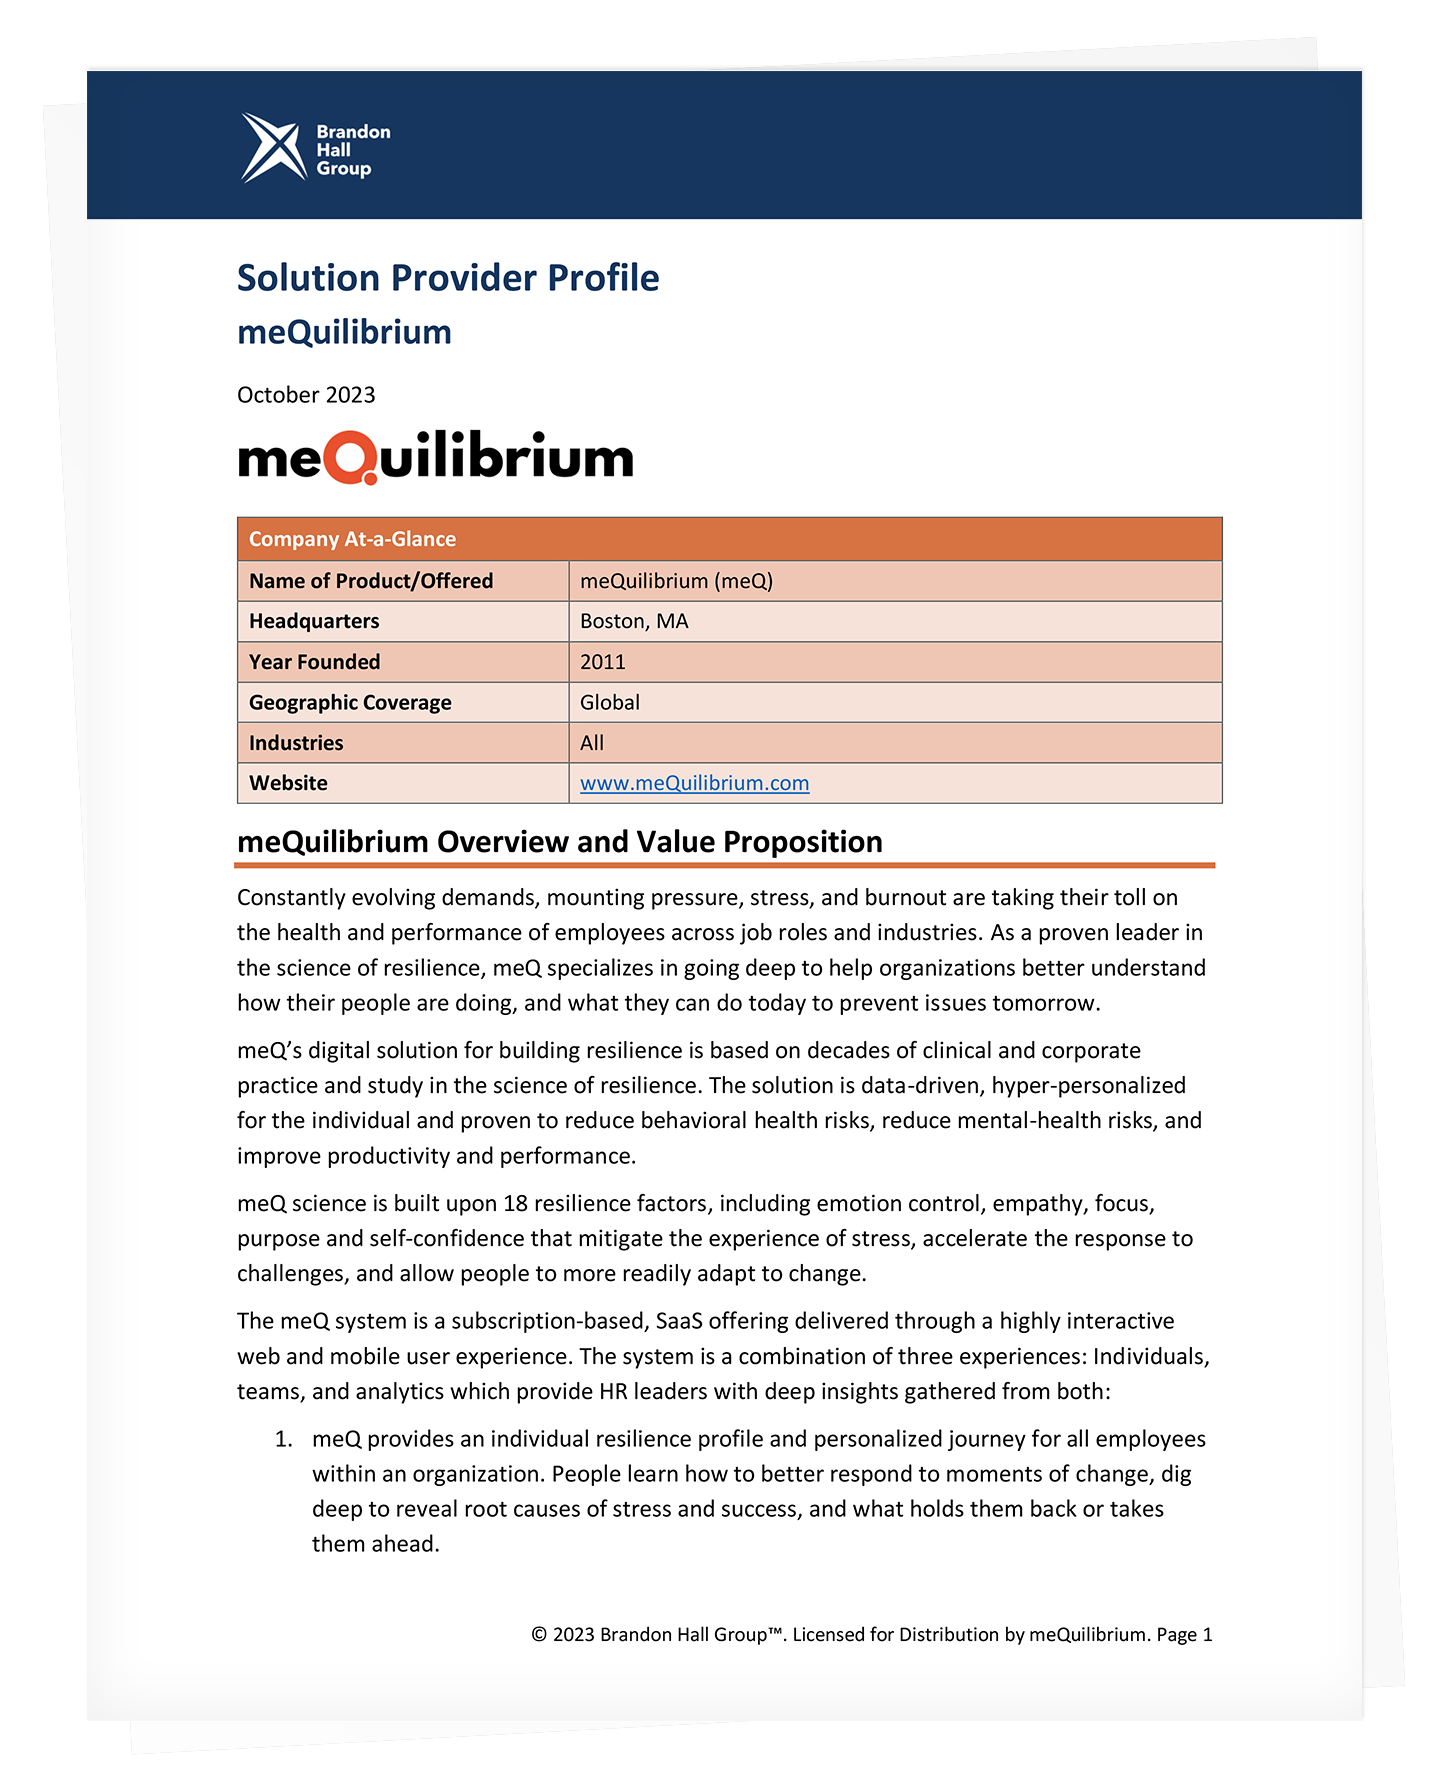 Brandon Hall Group’s meQ Solution Provider Profile